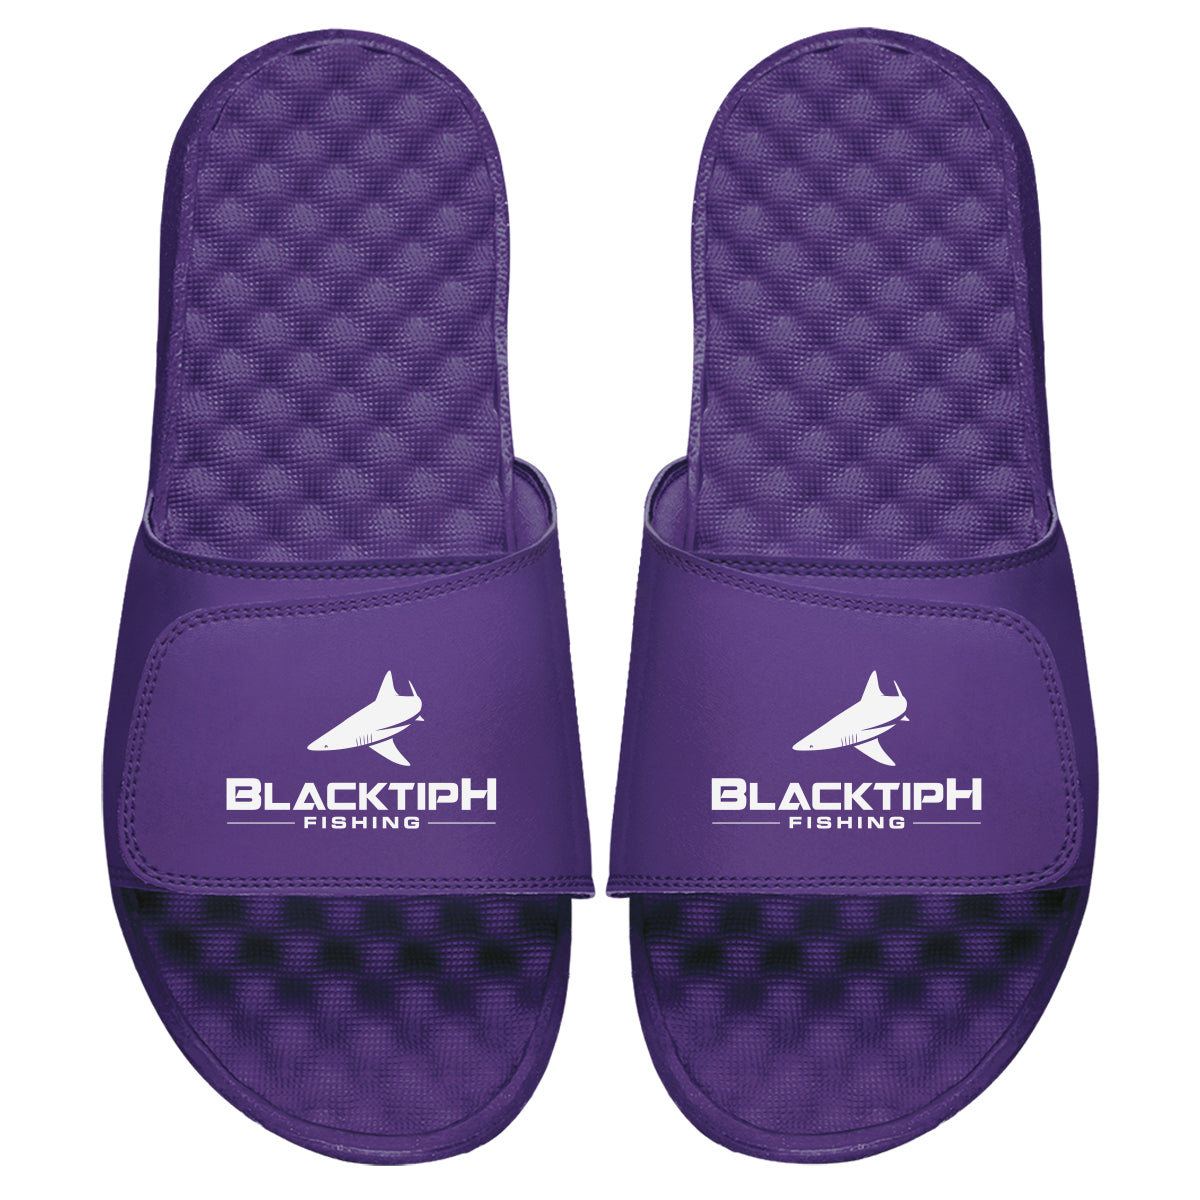 Blacktiph Fishing Slides